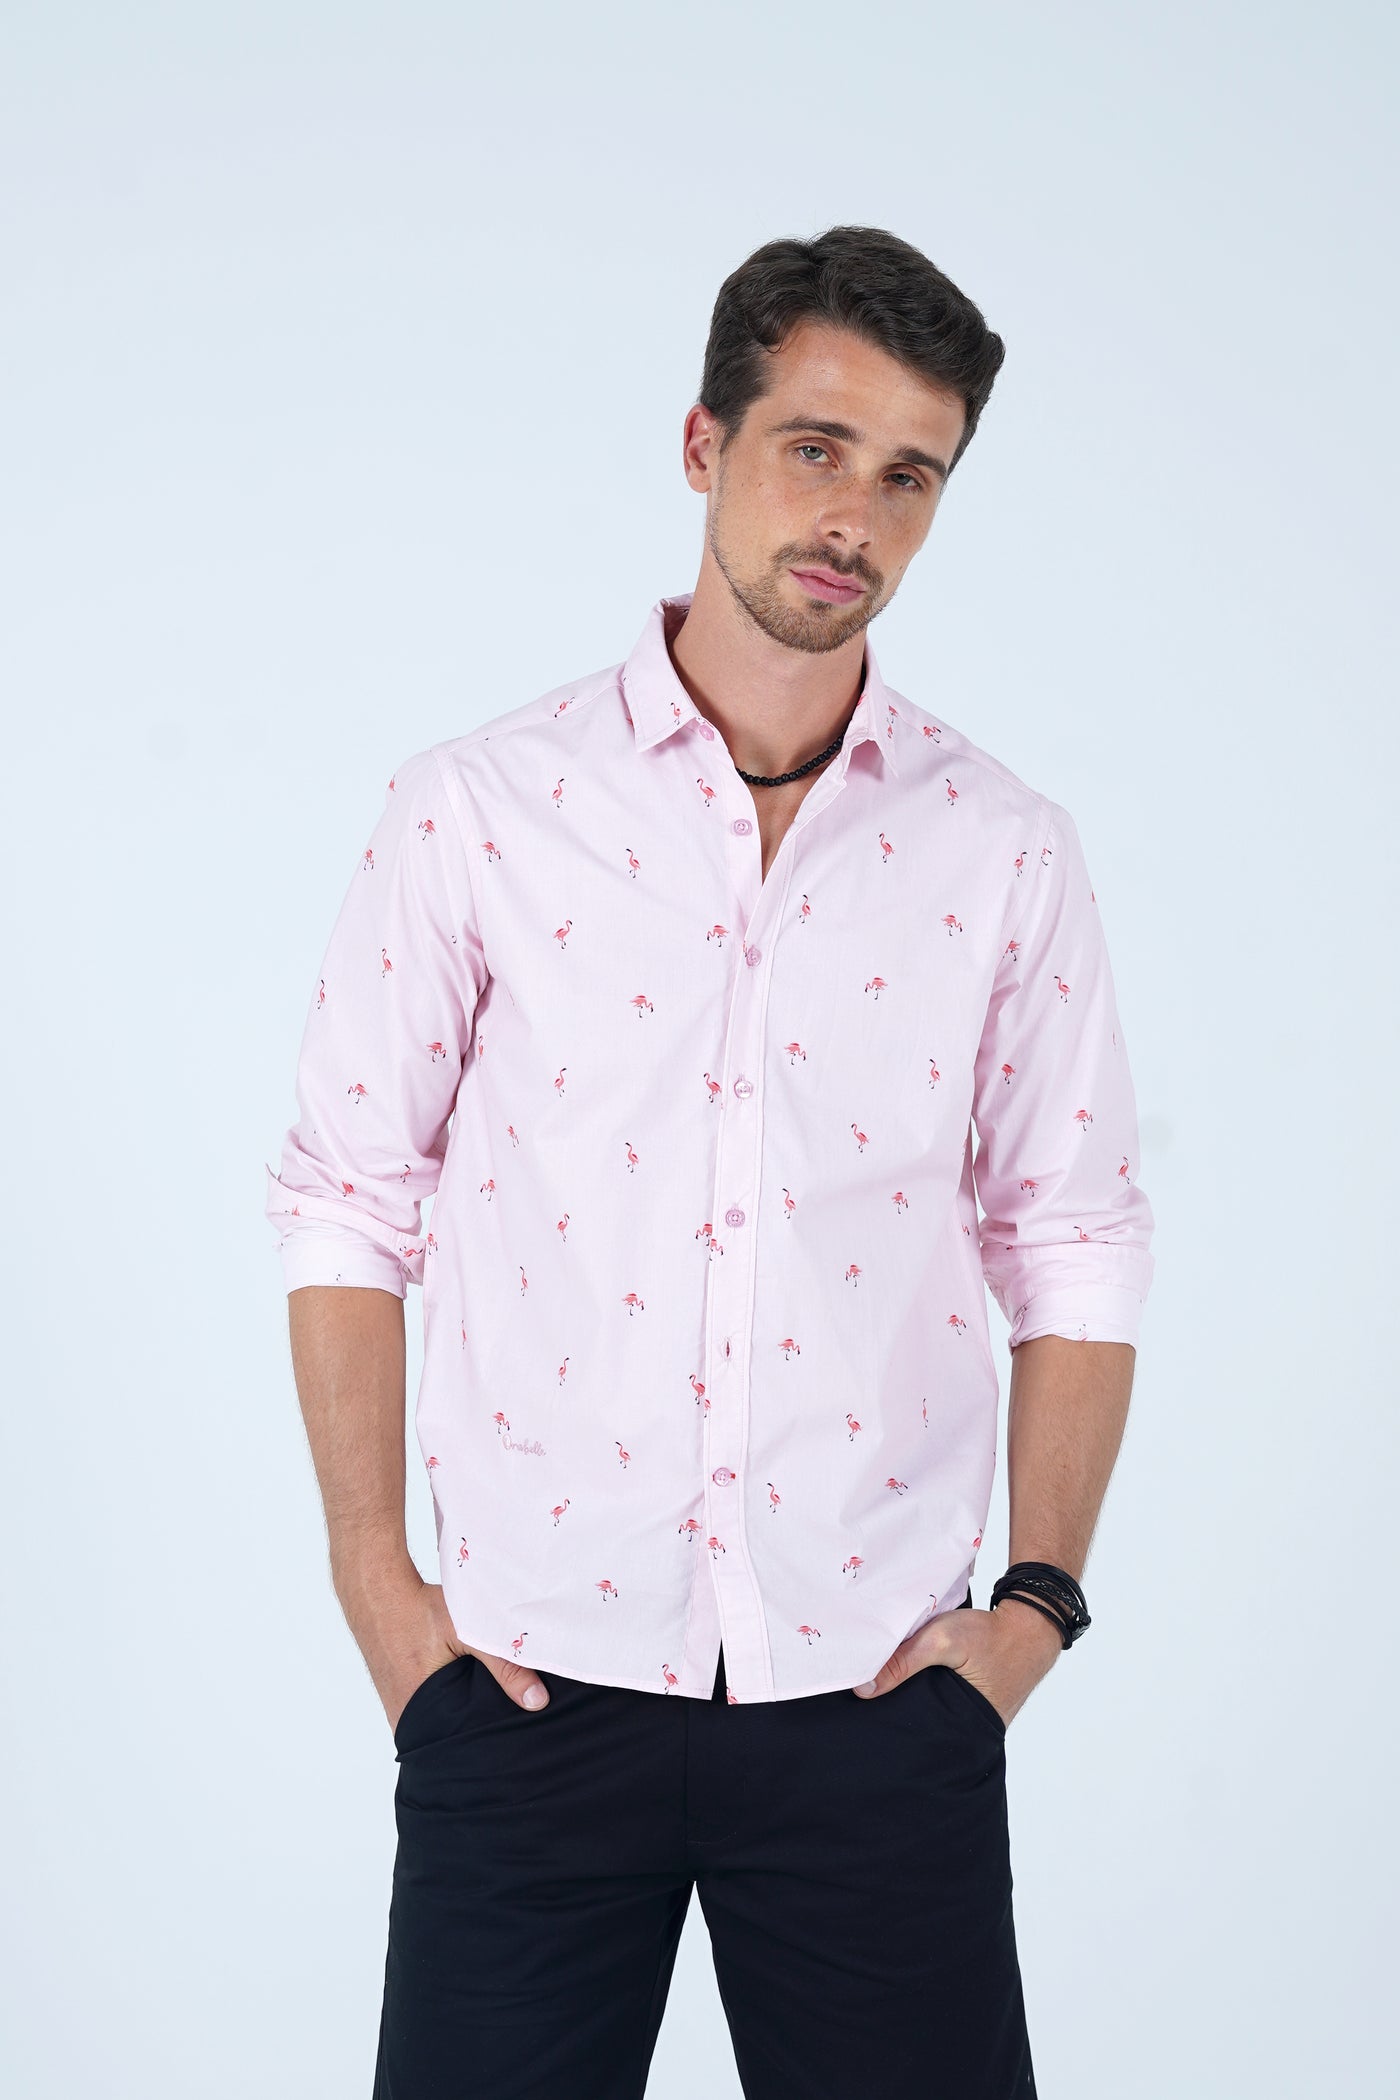 The Flamingo Flock Shirt